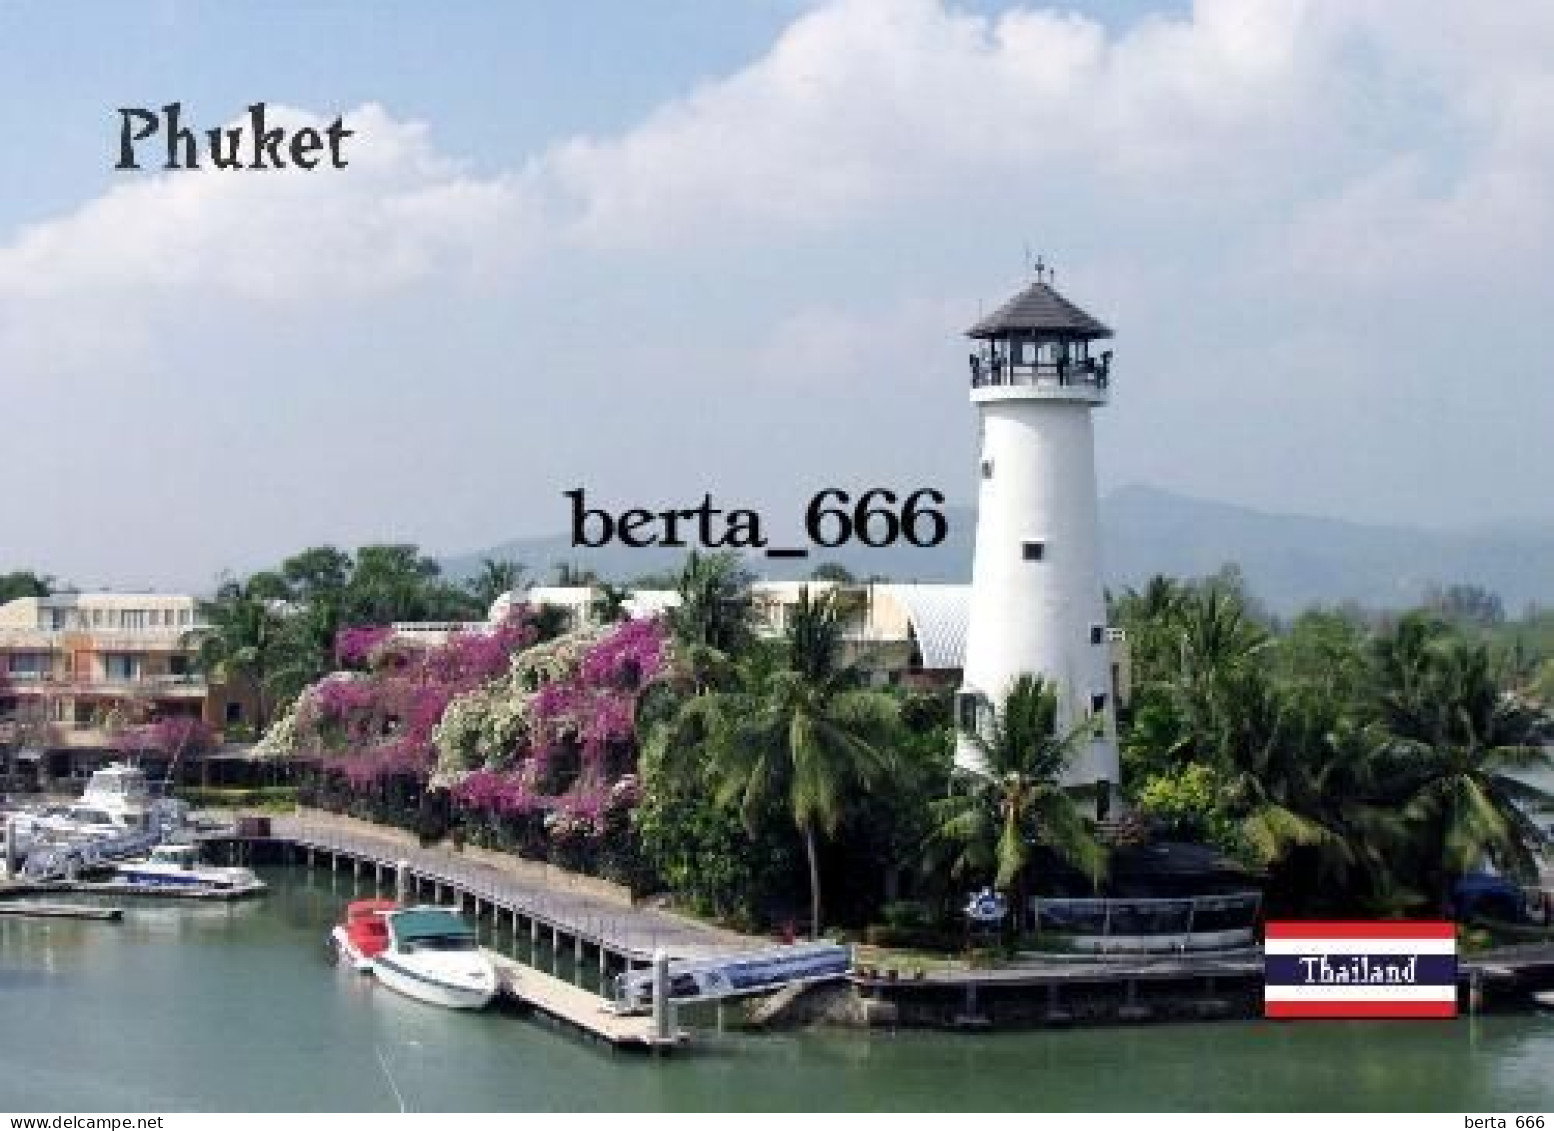 Thailand Phuket Island Lighthouse New Postcard - Lighthouses